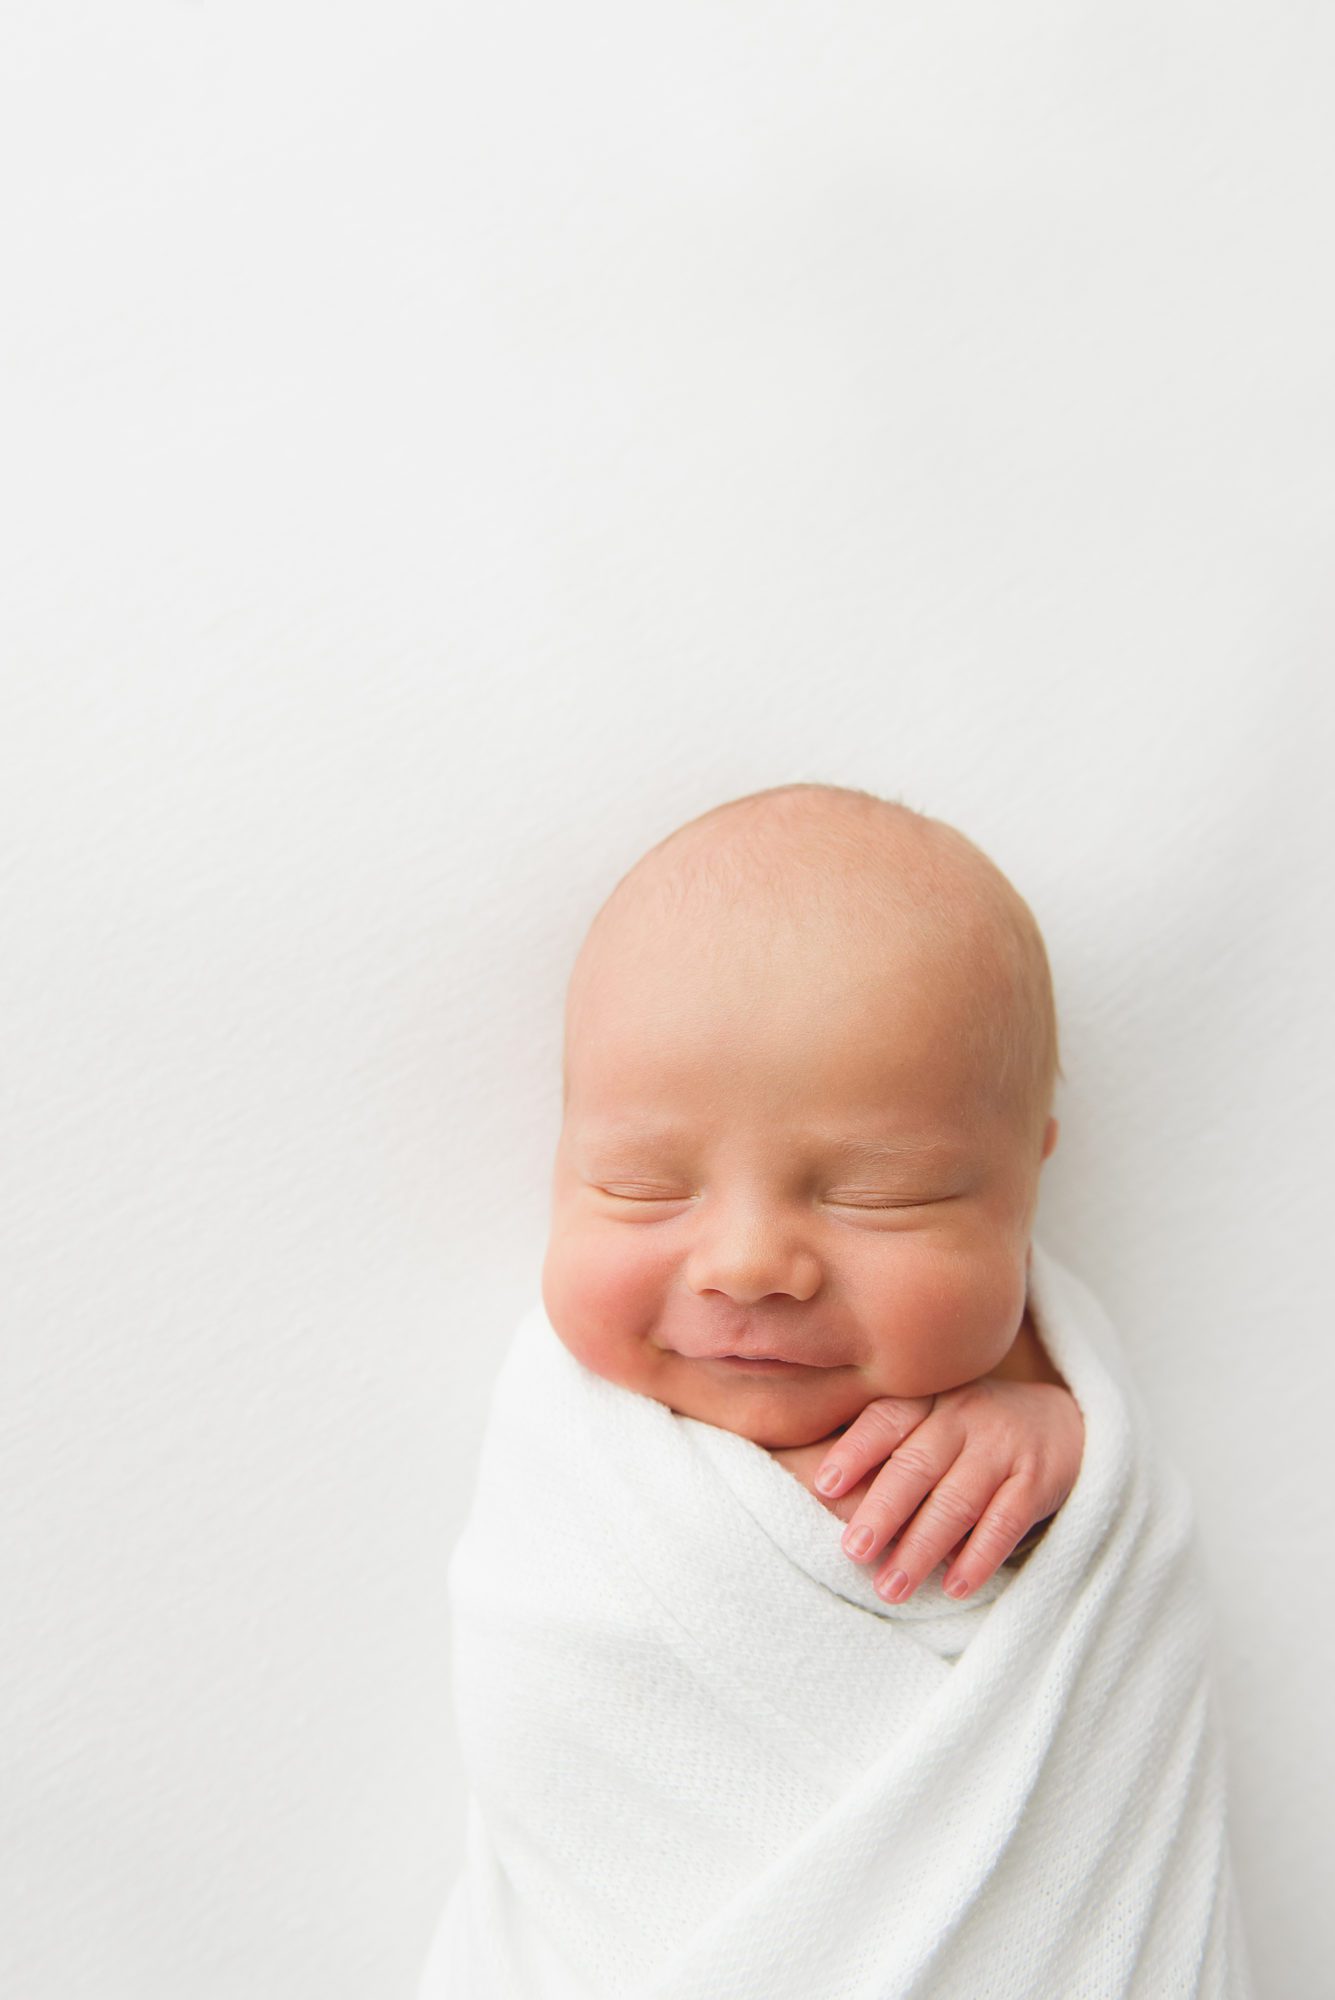 Minimalistic natural simple newborn photos baby boy smiling | Reaj Roberts Photography